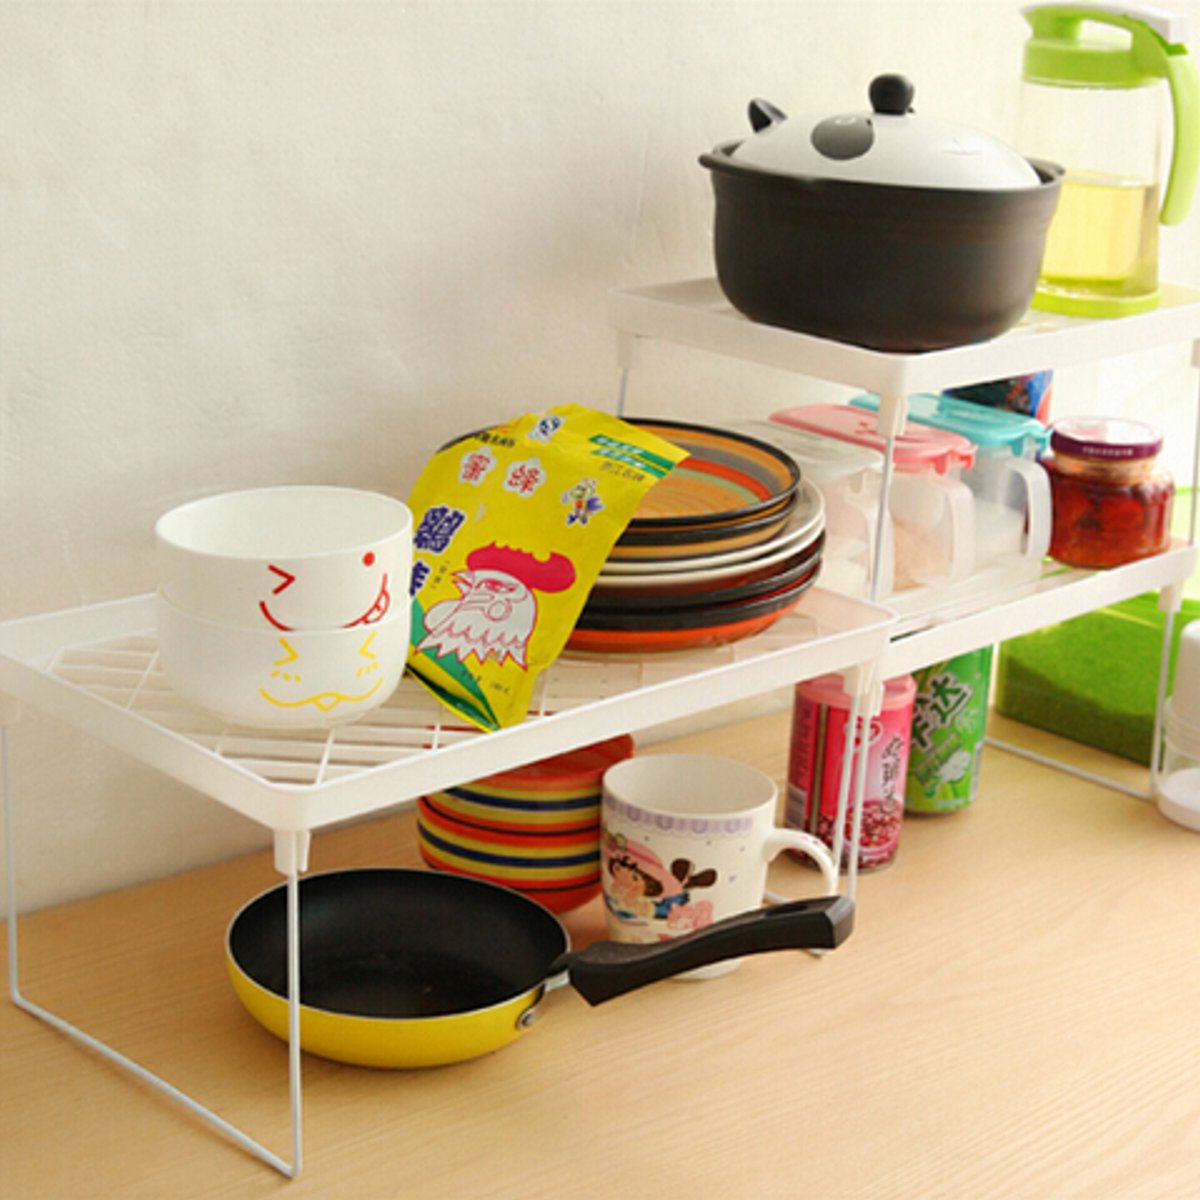 Foldable-Racks-Home-Bathroom-Kitchen-Storage-Rack-Shelving-Shelf-Holders-Organizer-995538-3